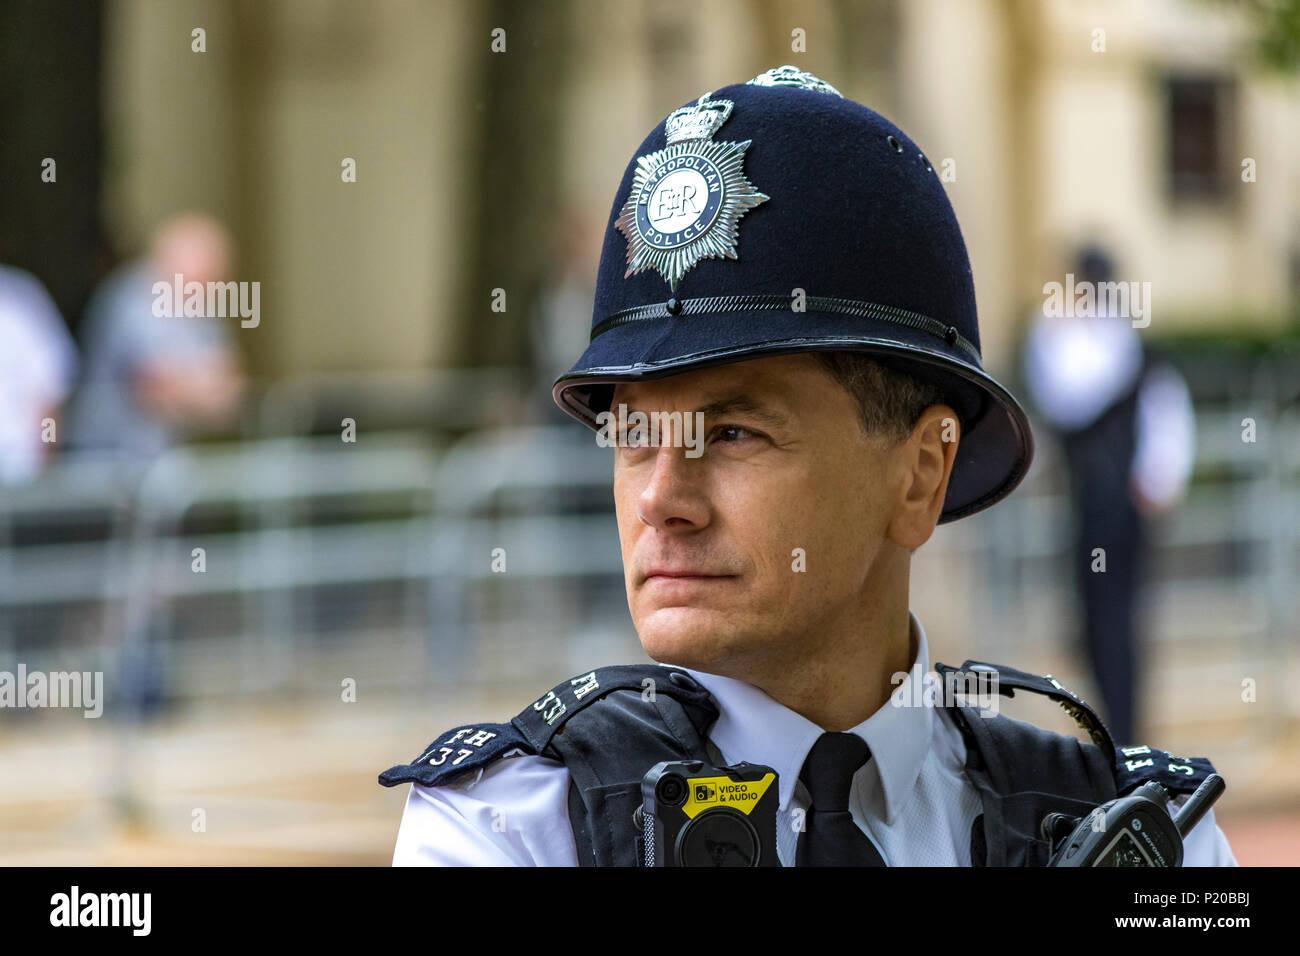 A Metropolitan Police Officer on duty in London,UK, 2018 Stock Photo